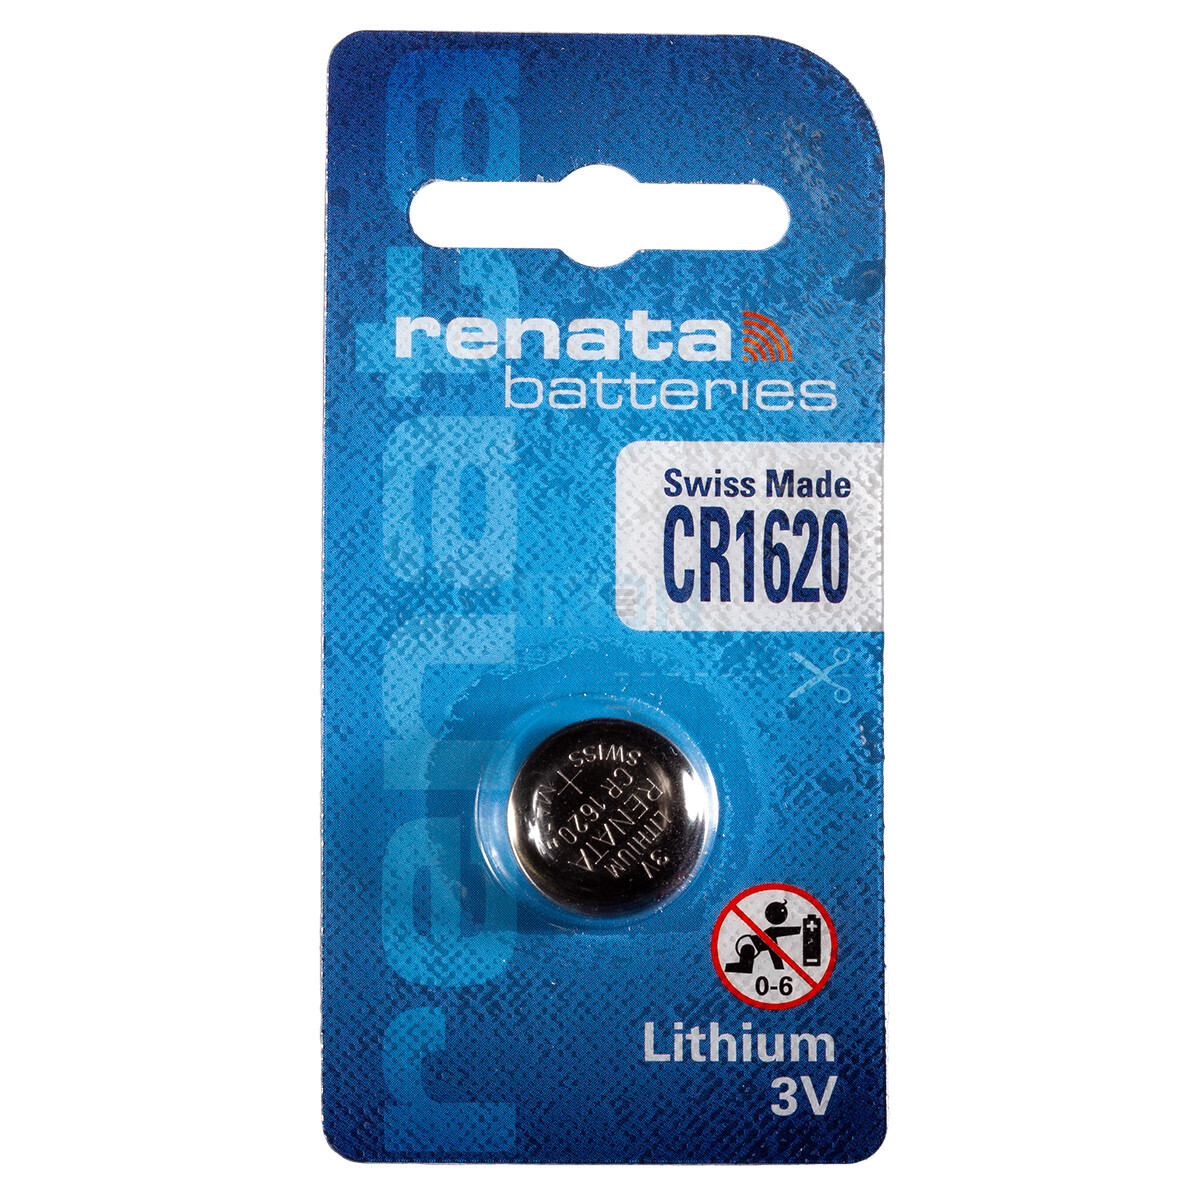 Renata - Swiss-made Lithium 3V Battery CR1620